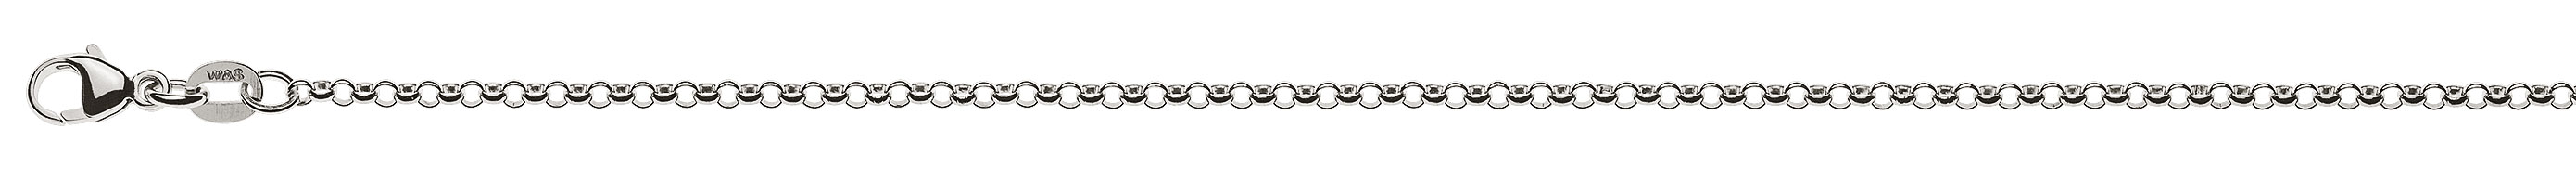 AURONOS Prestige Necklace white gold 18K pea chain 60cm 2.0mm